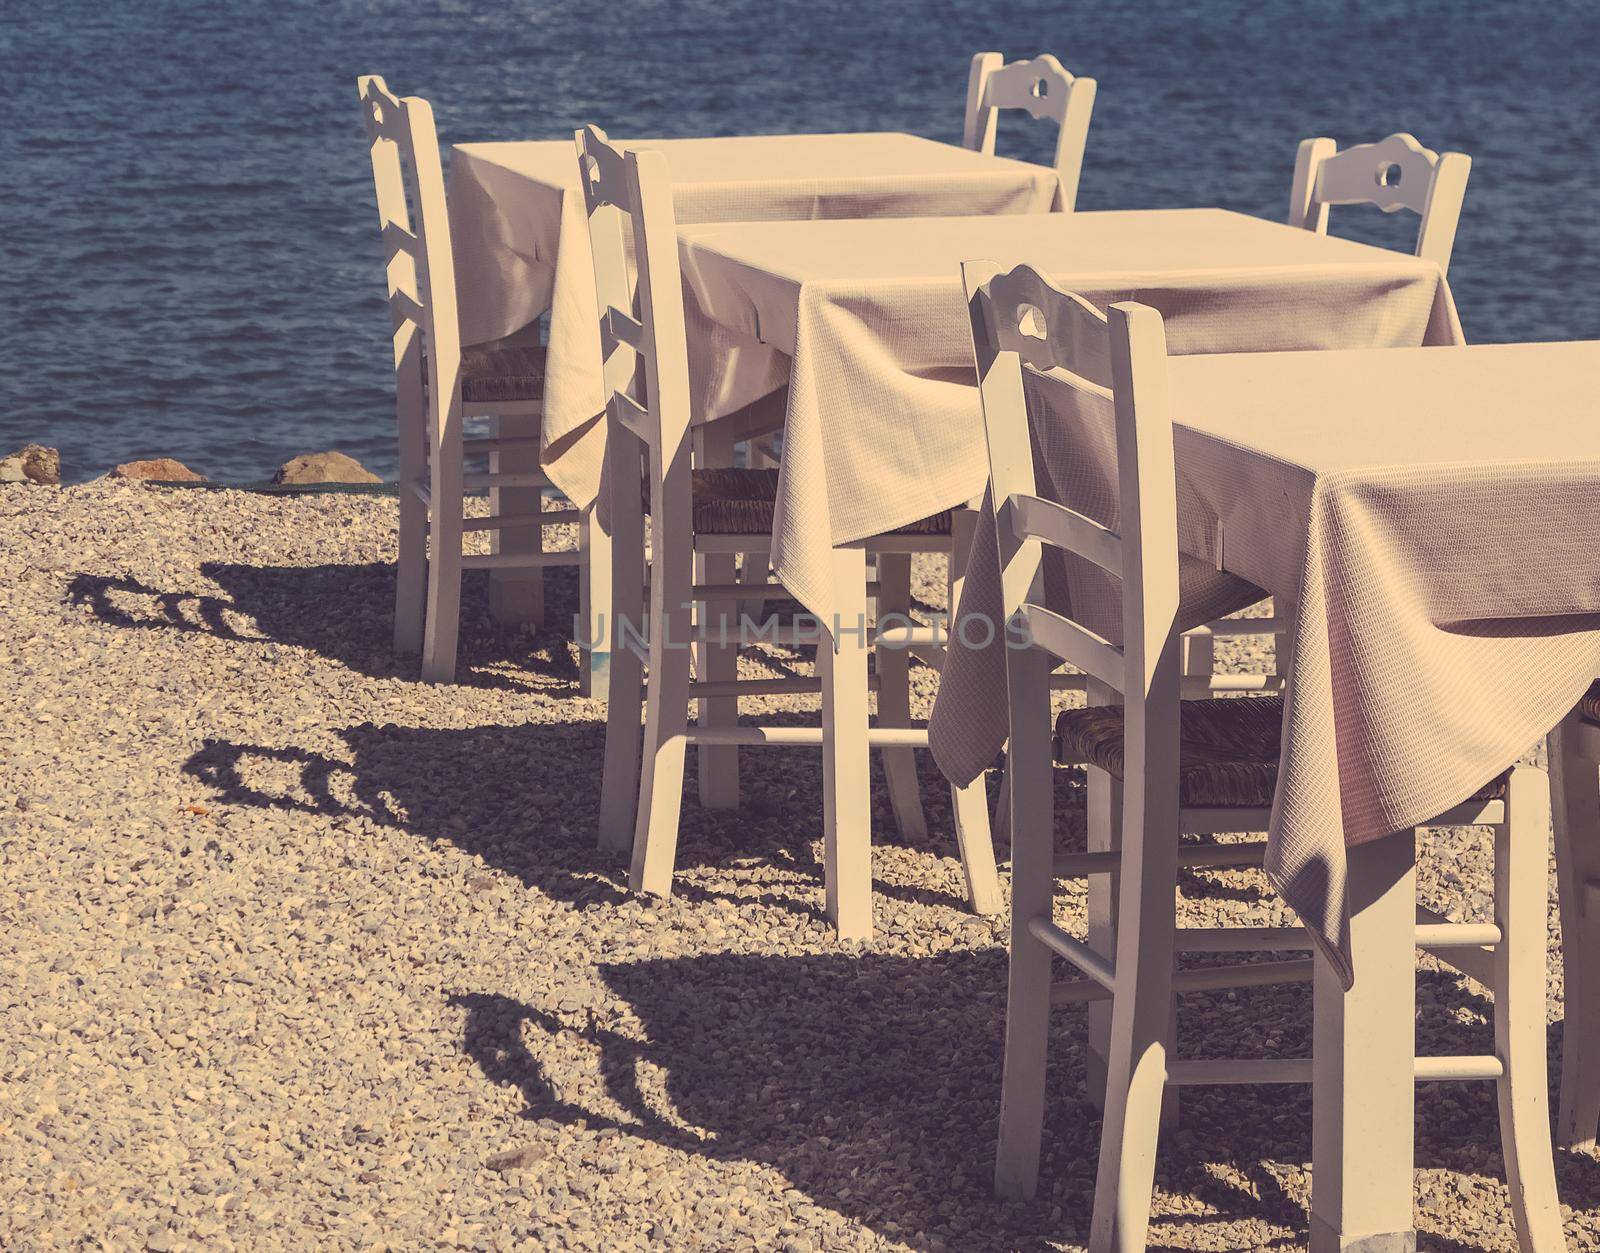 Restaurant by the sea, Mediterranean vacation by Anneleven